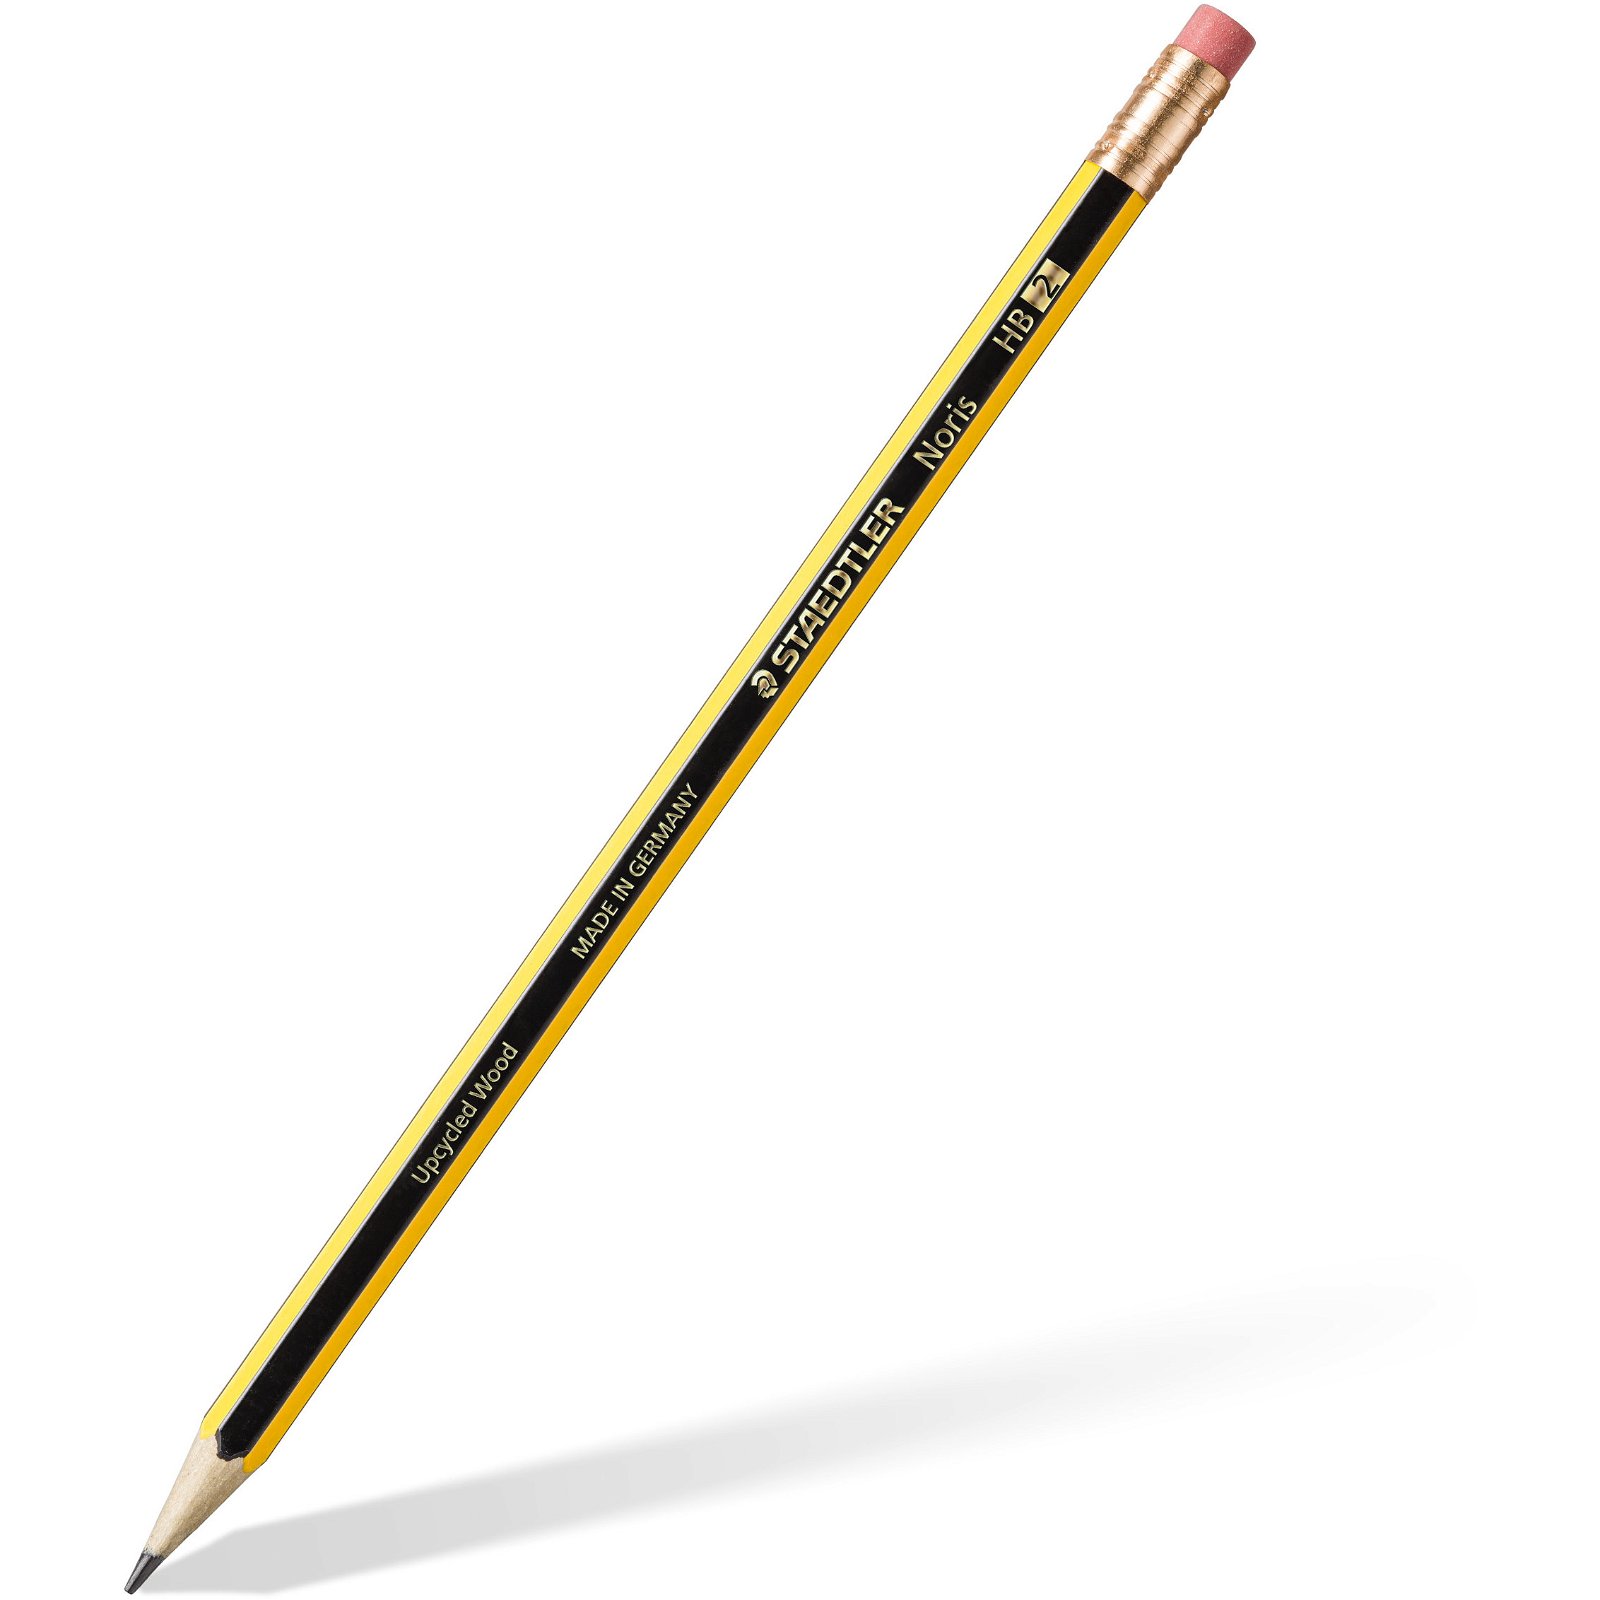 STAEDTLER Noris 122 blyanter